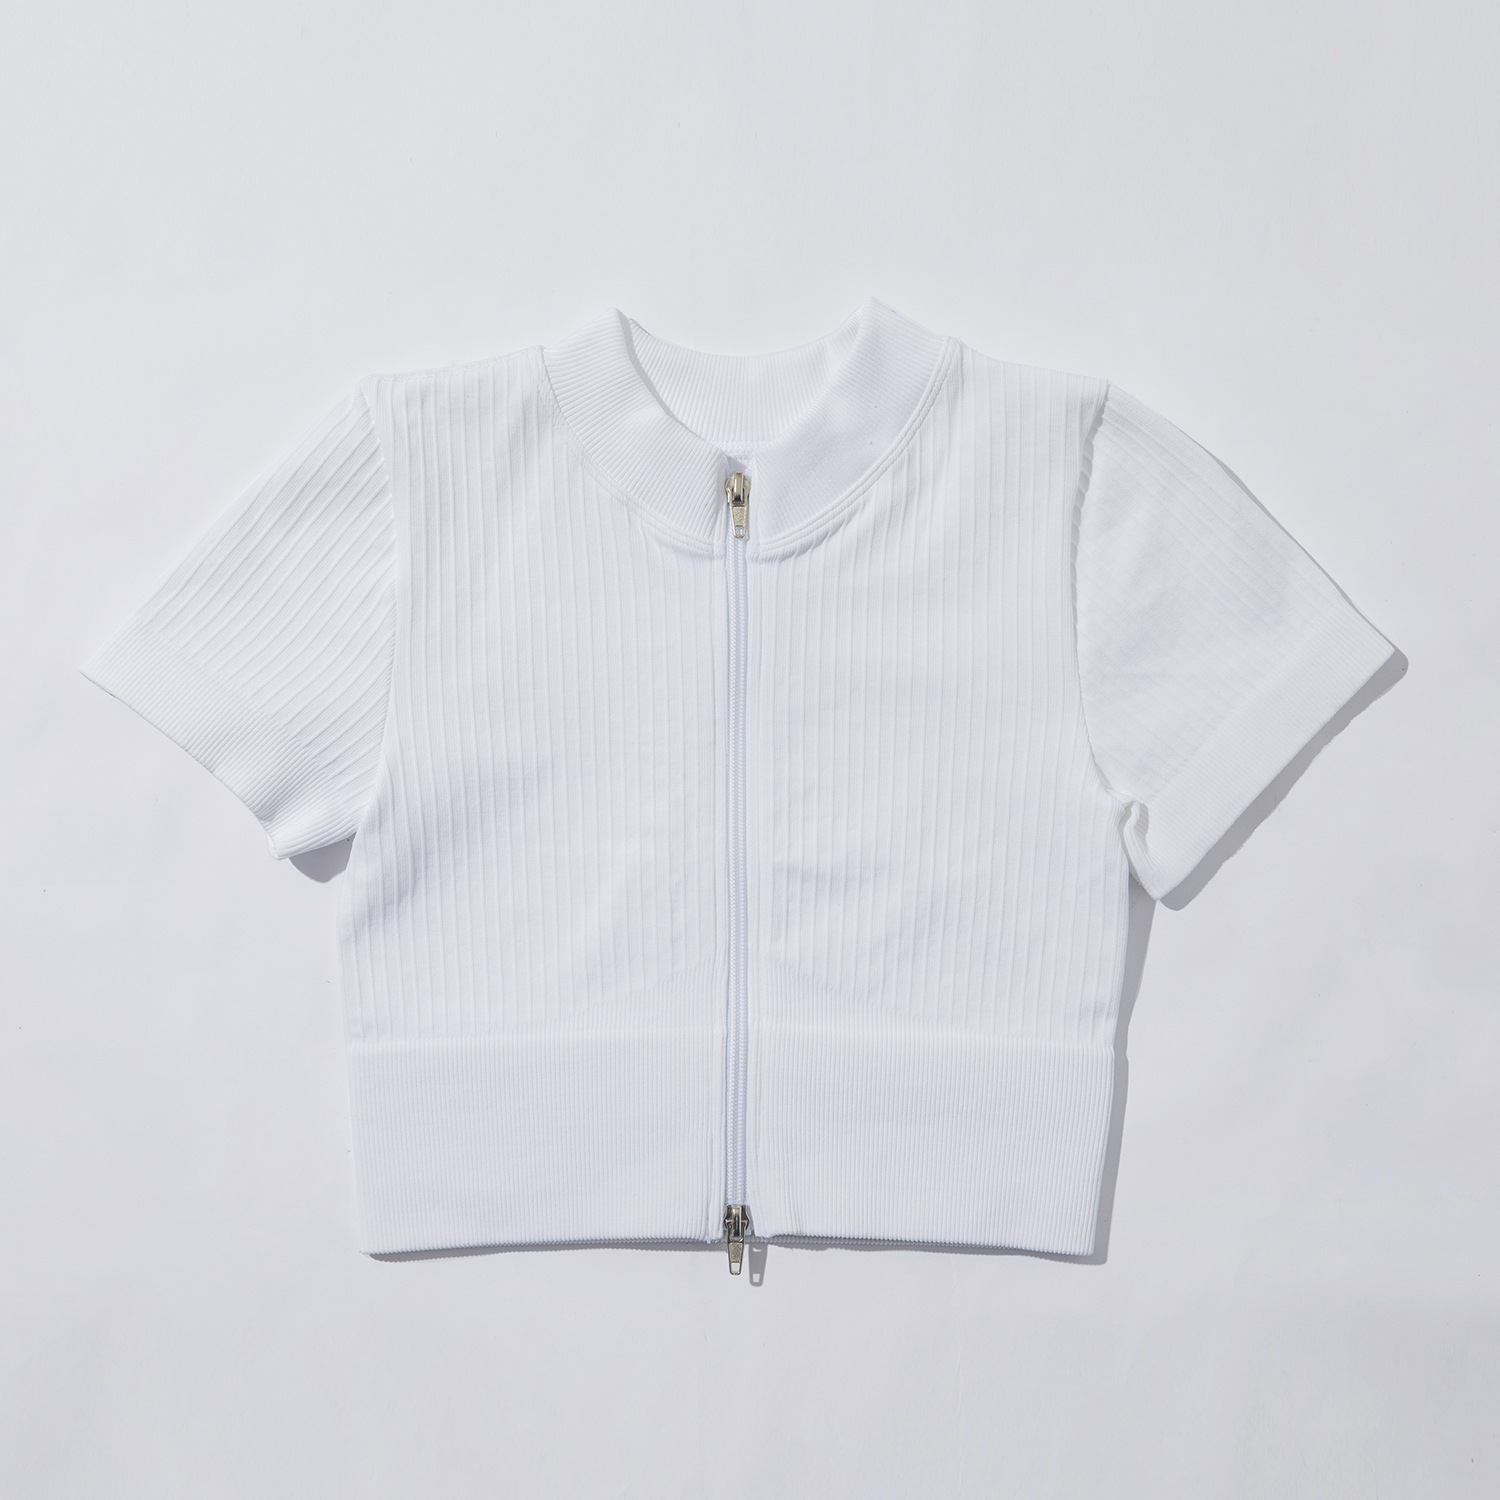 White zip-up short sleeves